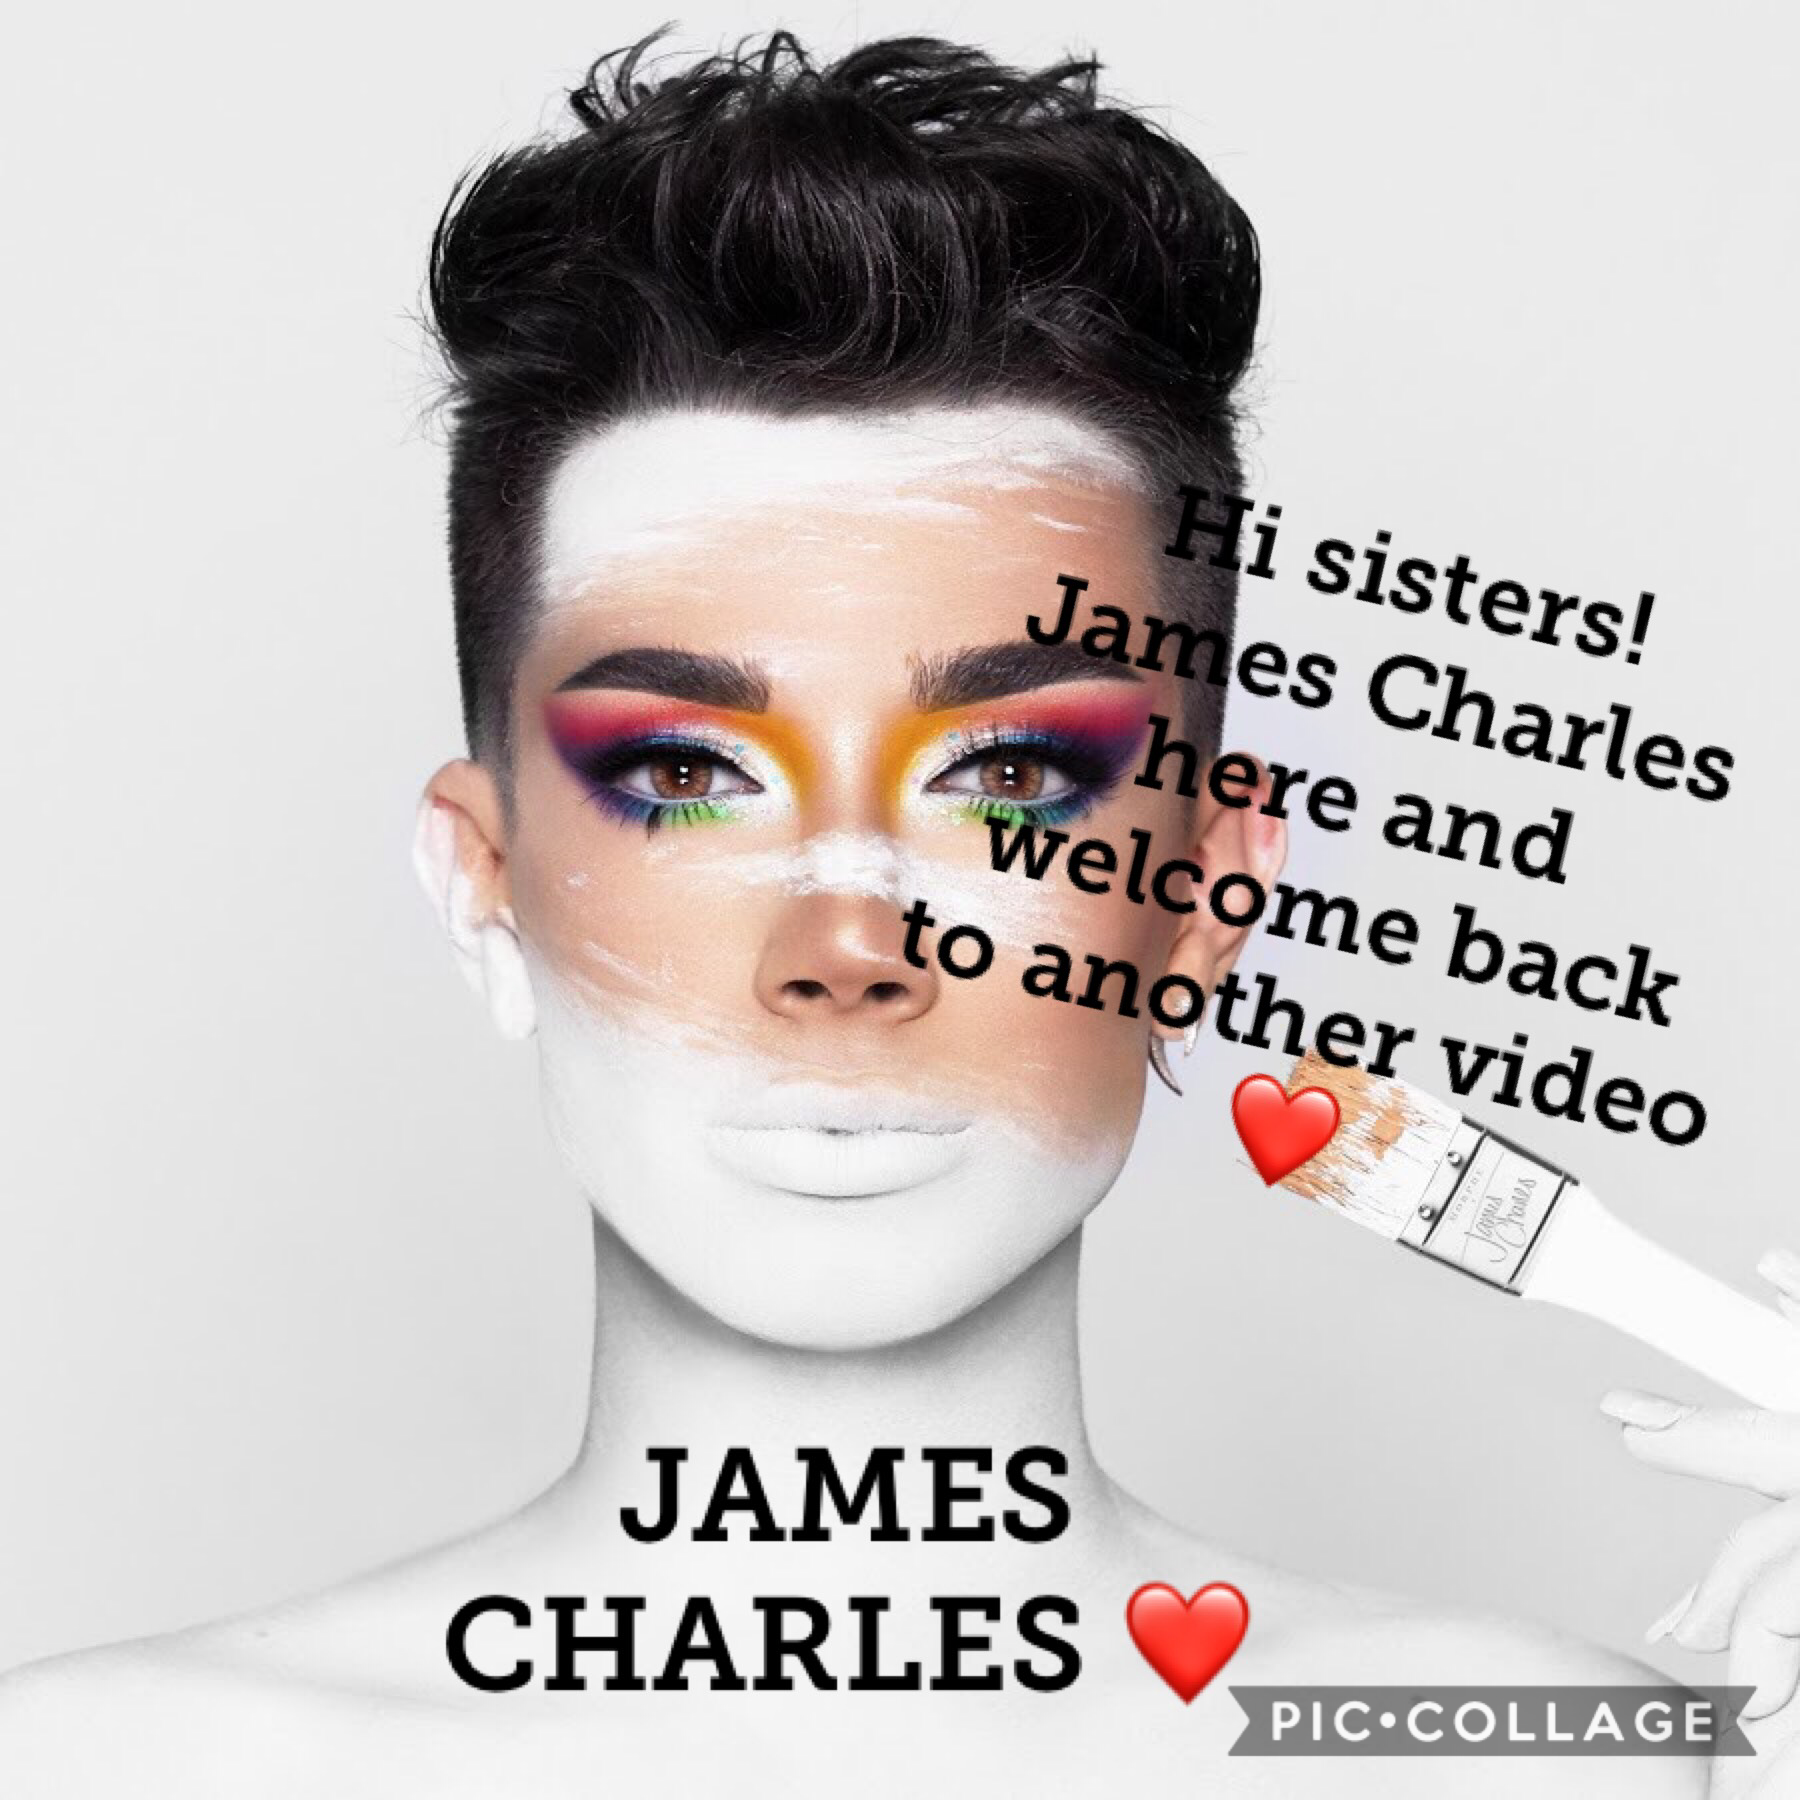 Do y’all like James Charles cause I do❤️